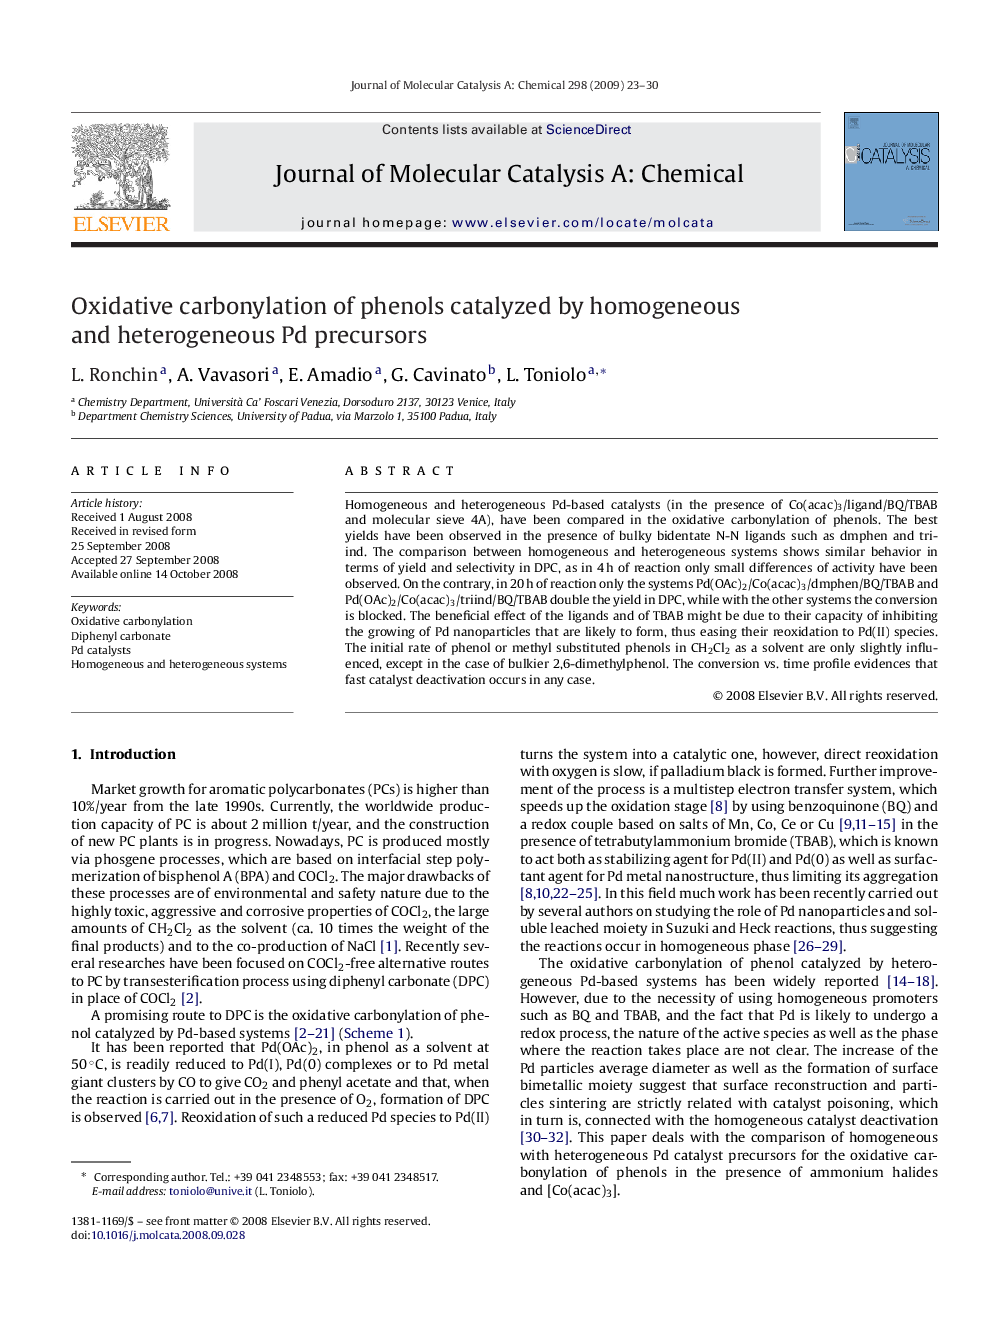 Oxidative carbonylation of phenols catalyzed by homogeneous and heterogeneous Pd precursors